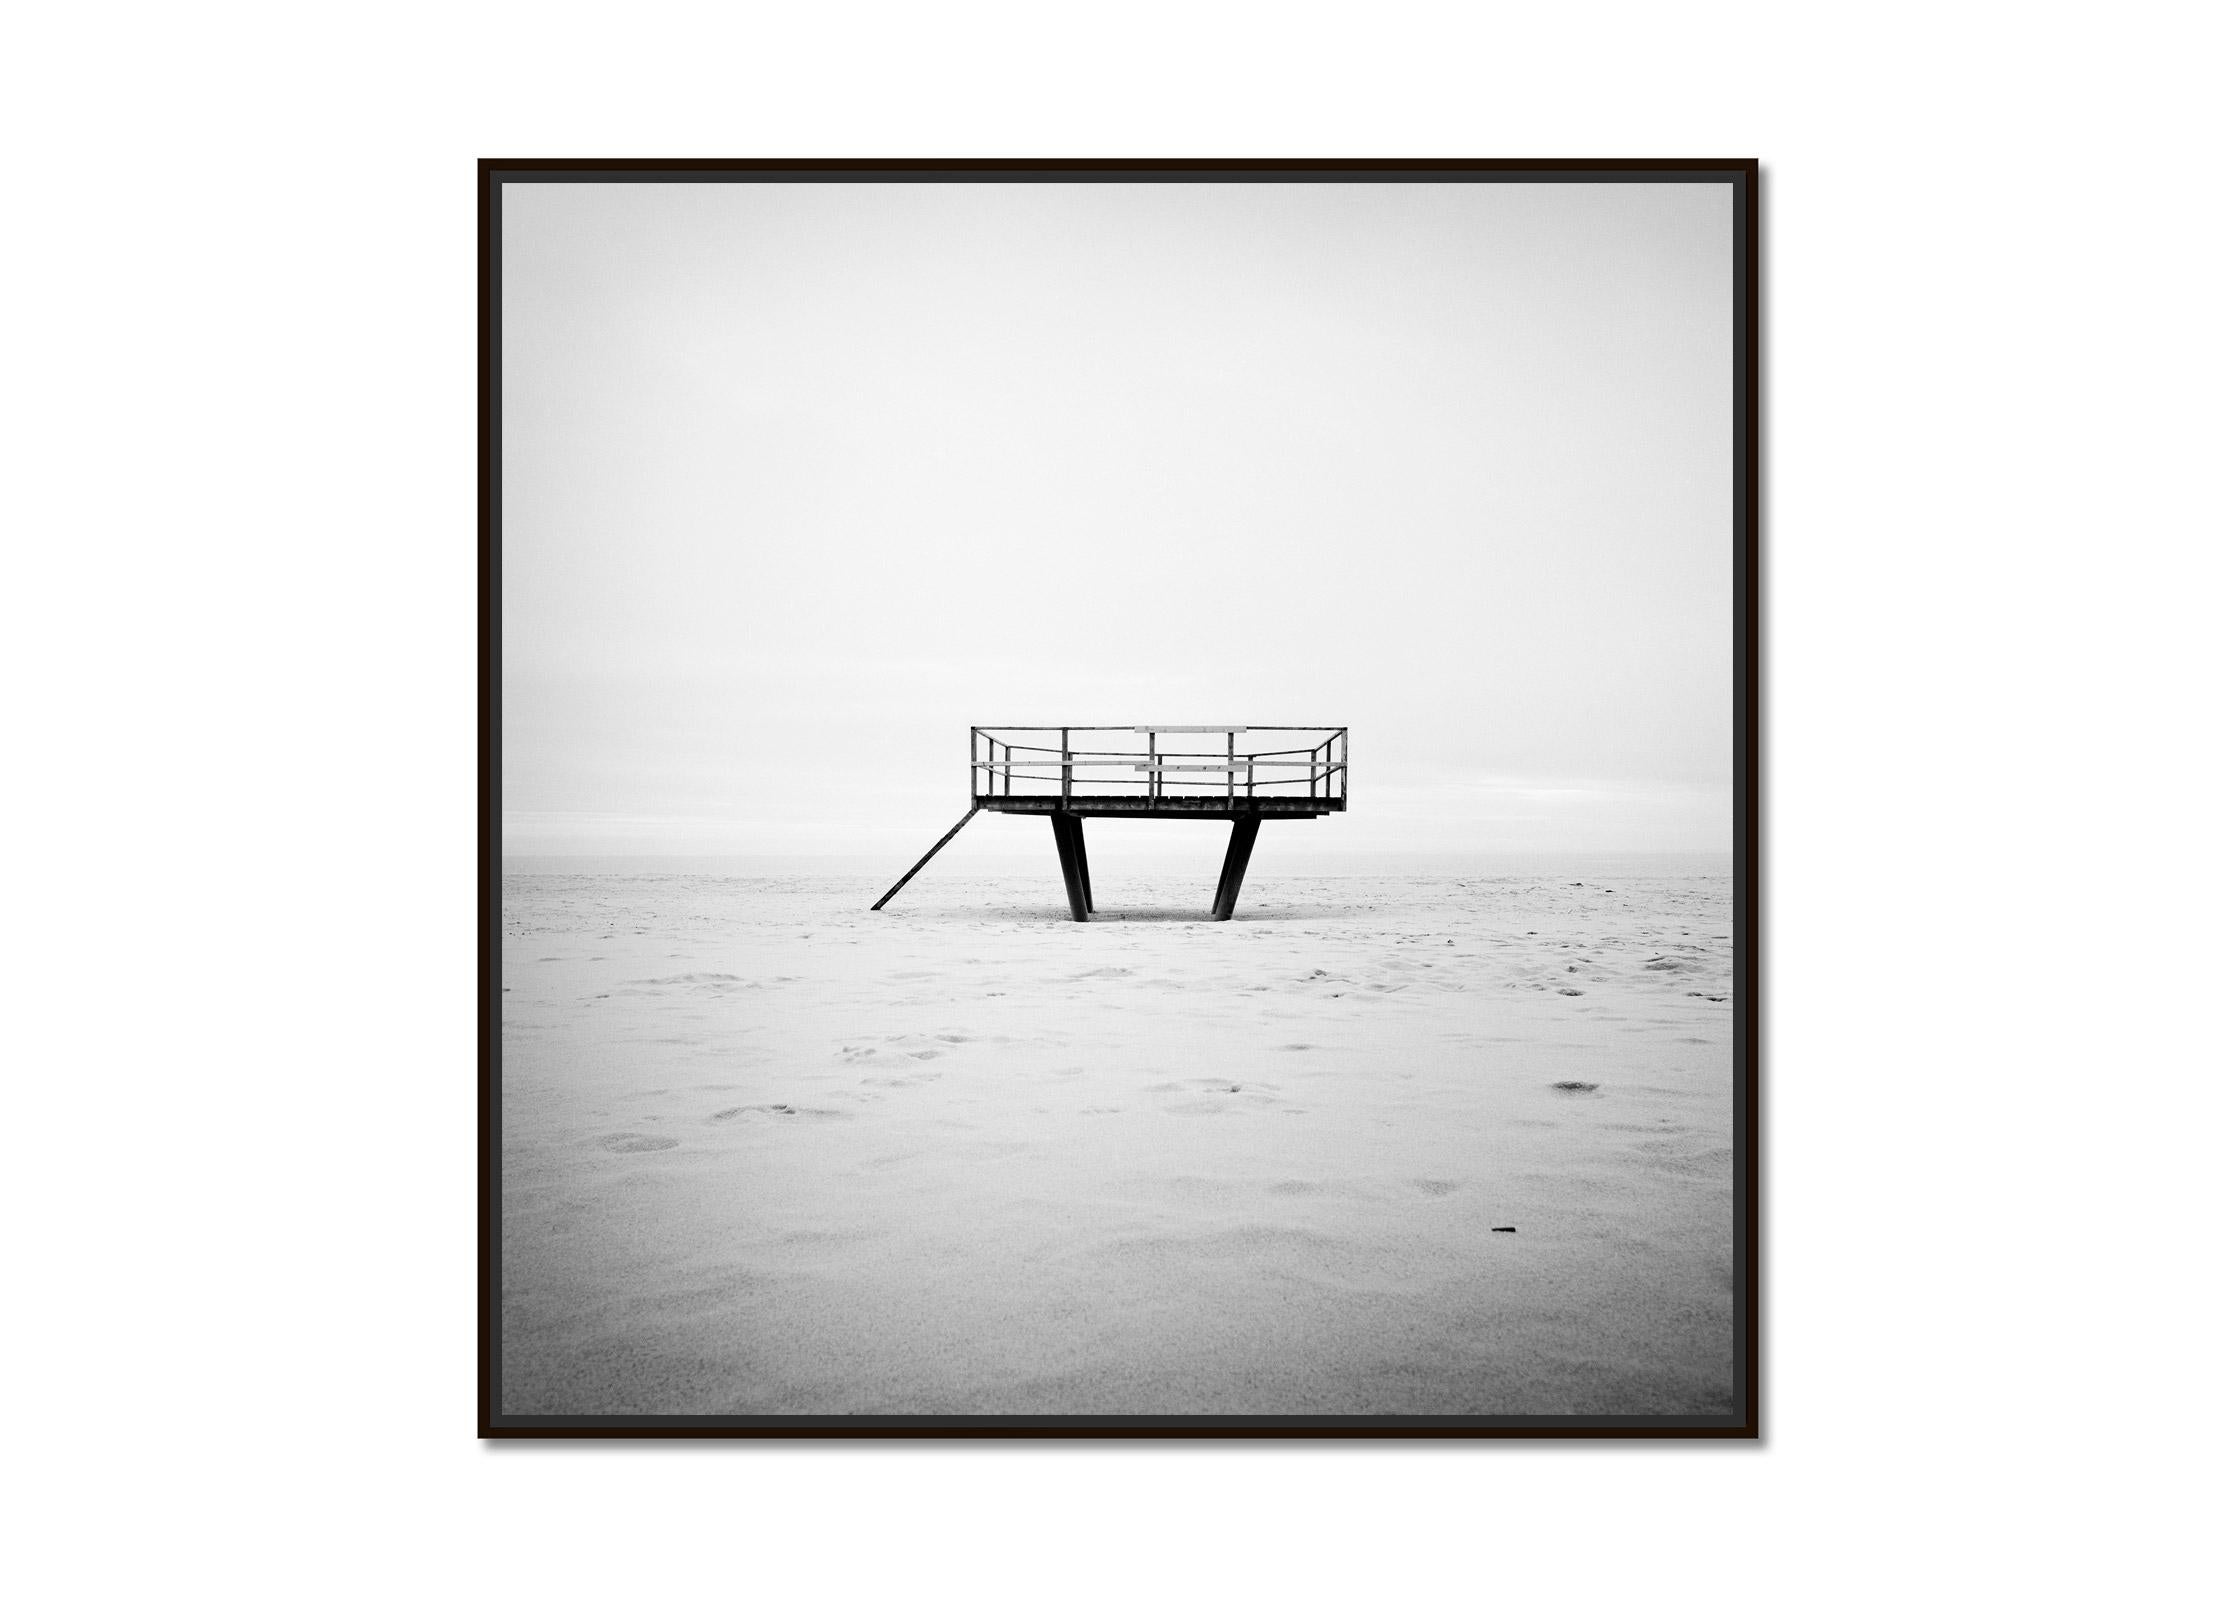 Dance Floor, lifeguard tower, black & white minimalist landscape art photography - Photograph by Gerald Berghammer